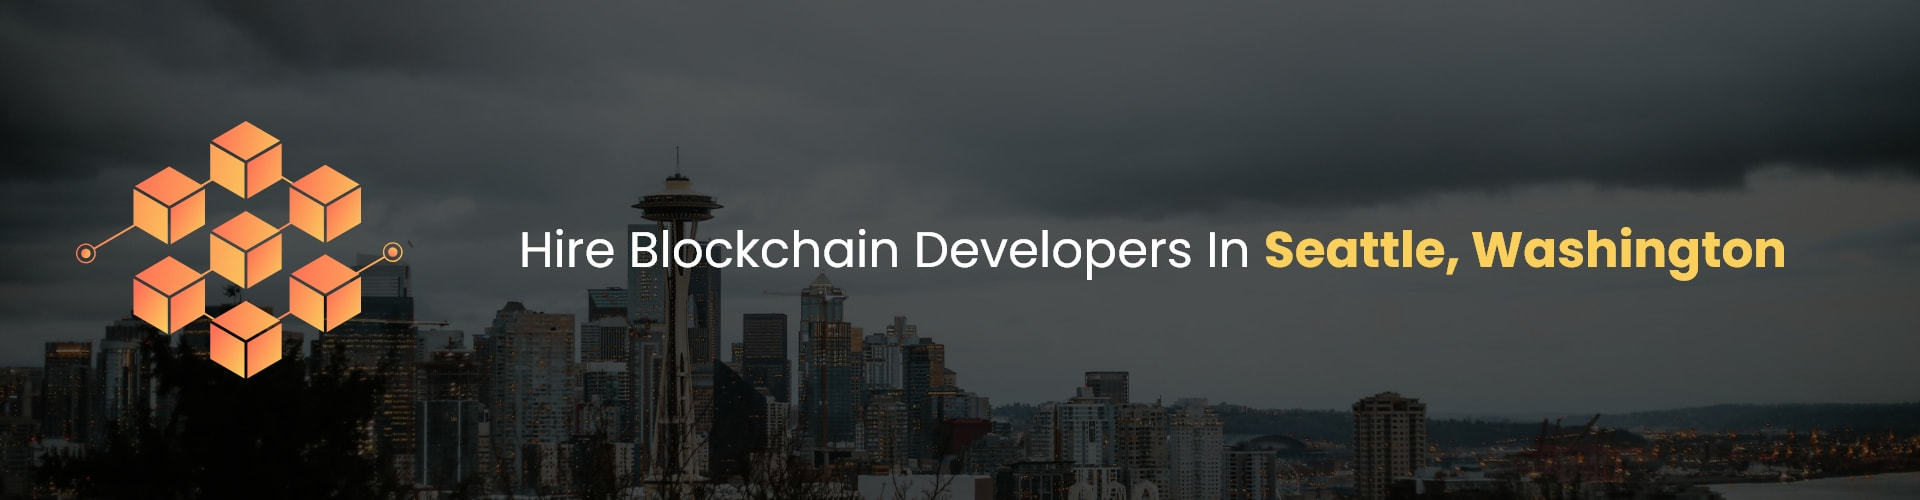 hire blockchain developers in seattle